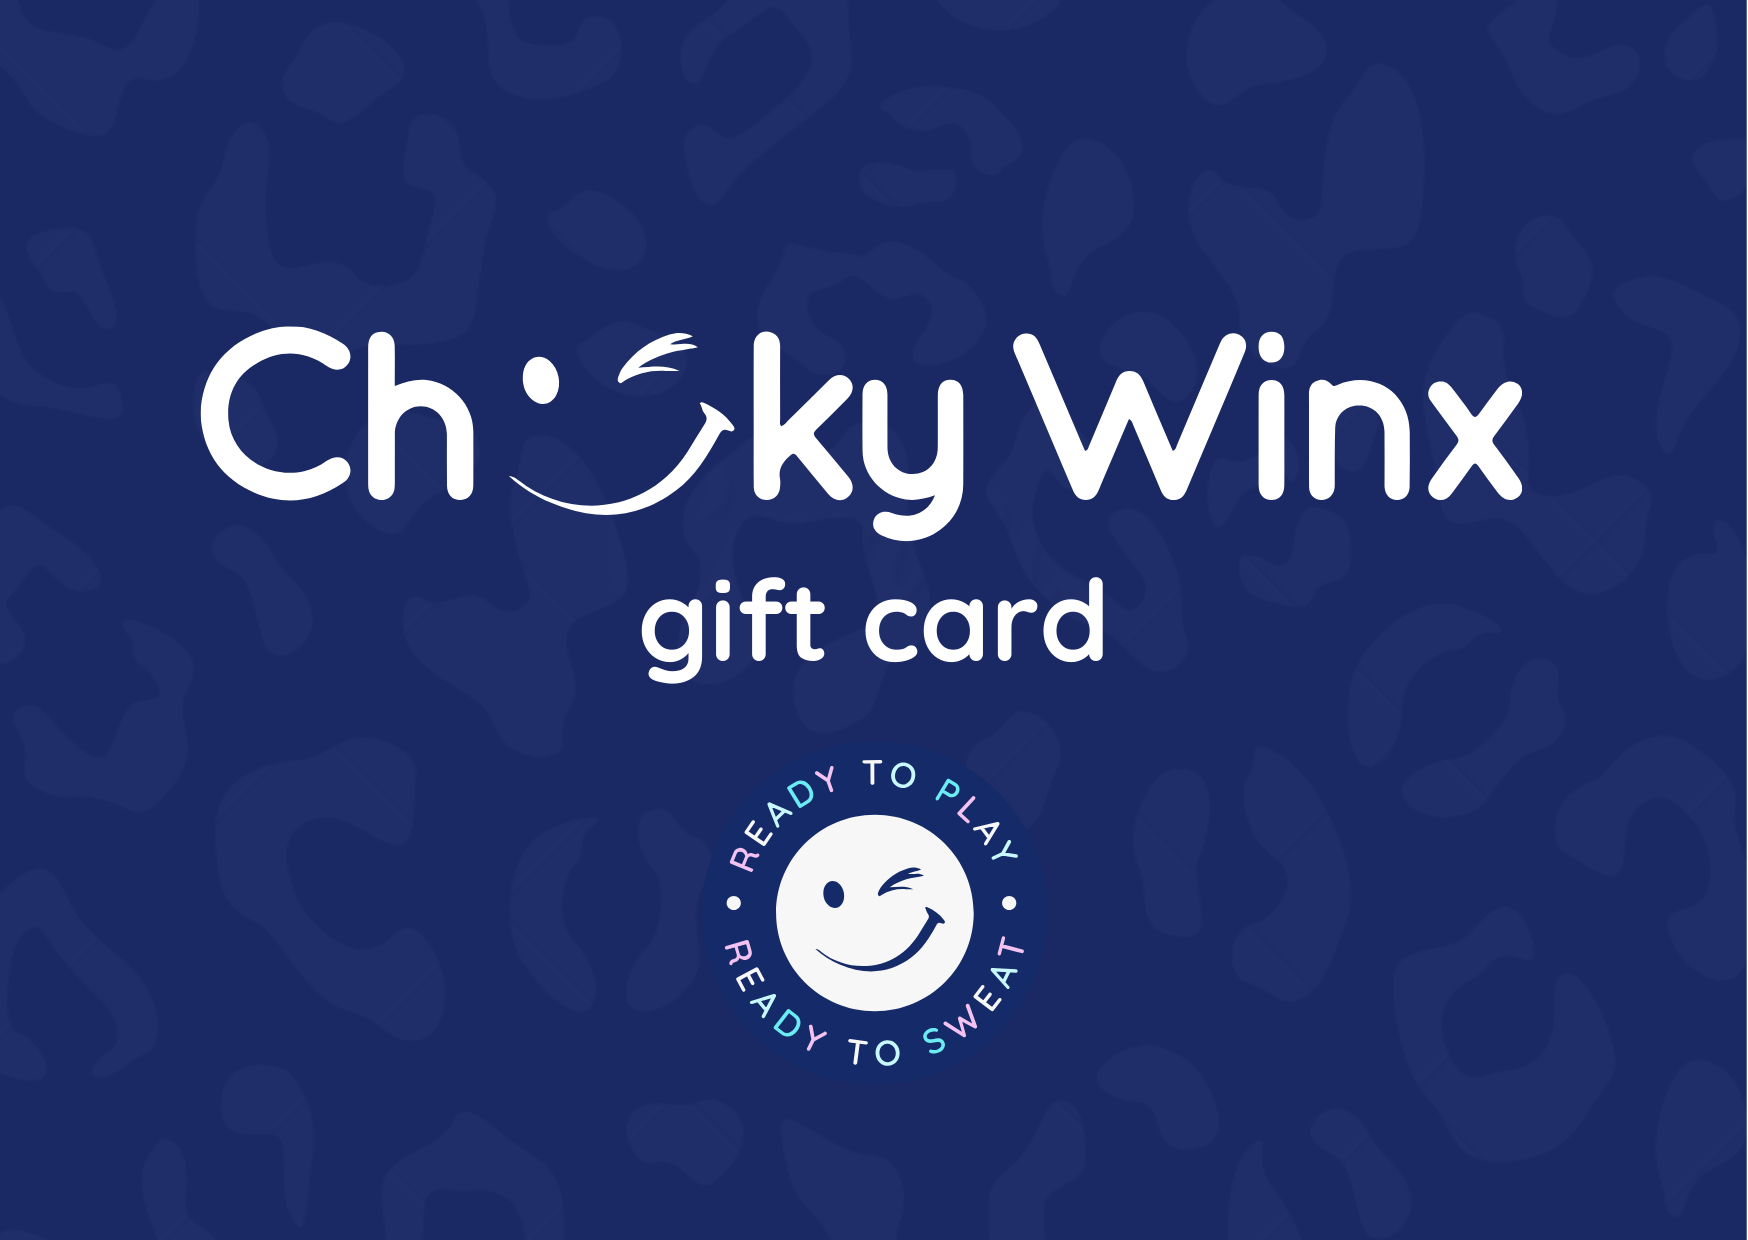 Cheeky Winx Gift Card